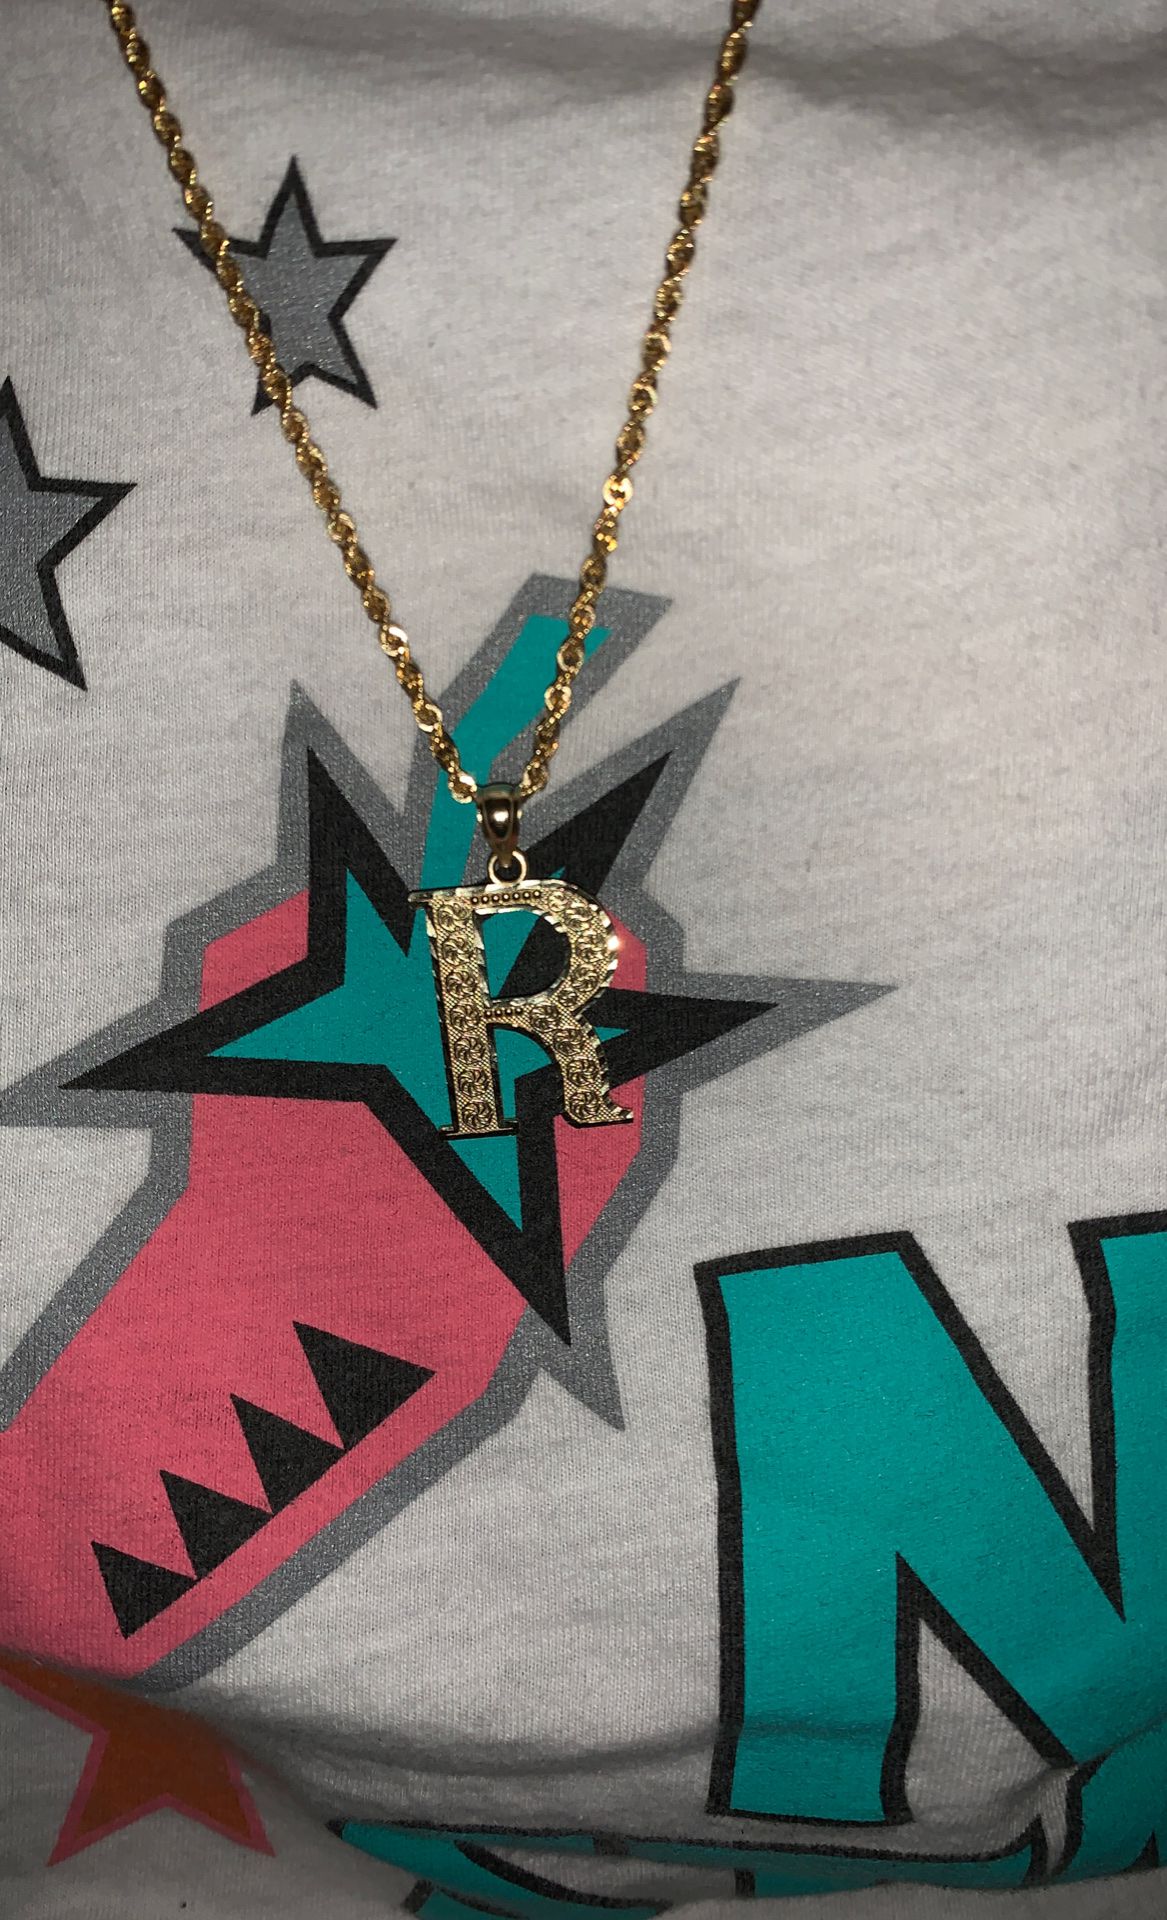 18k gold chain w/ “R” gold pendant